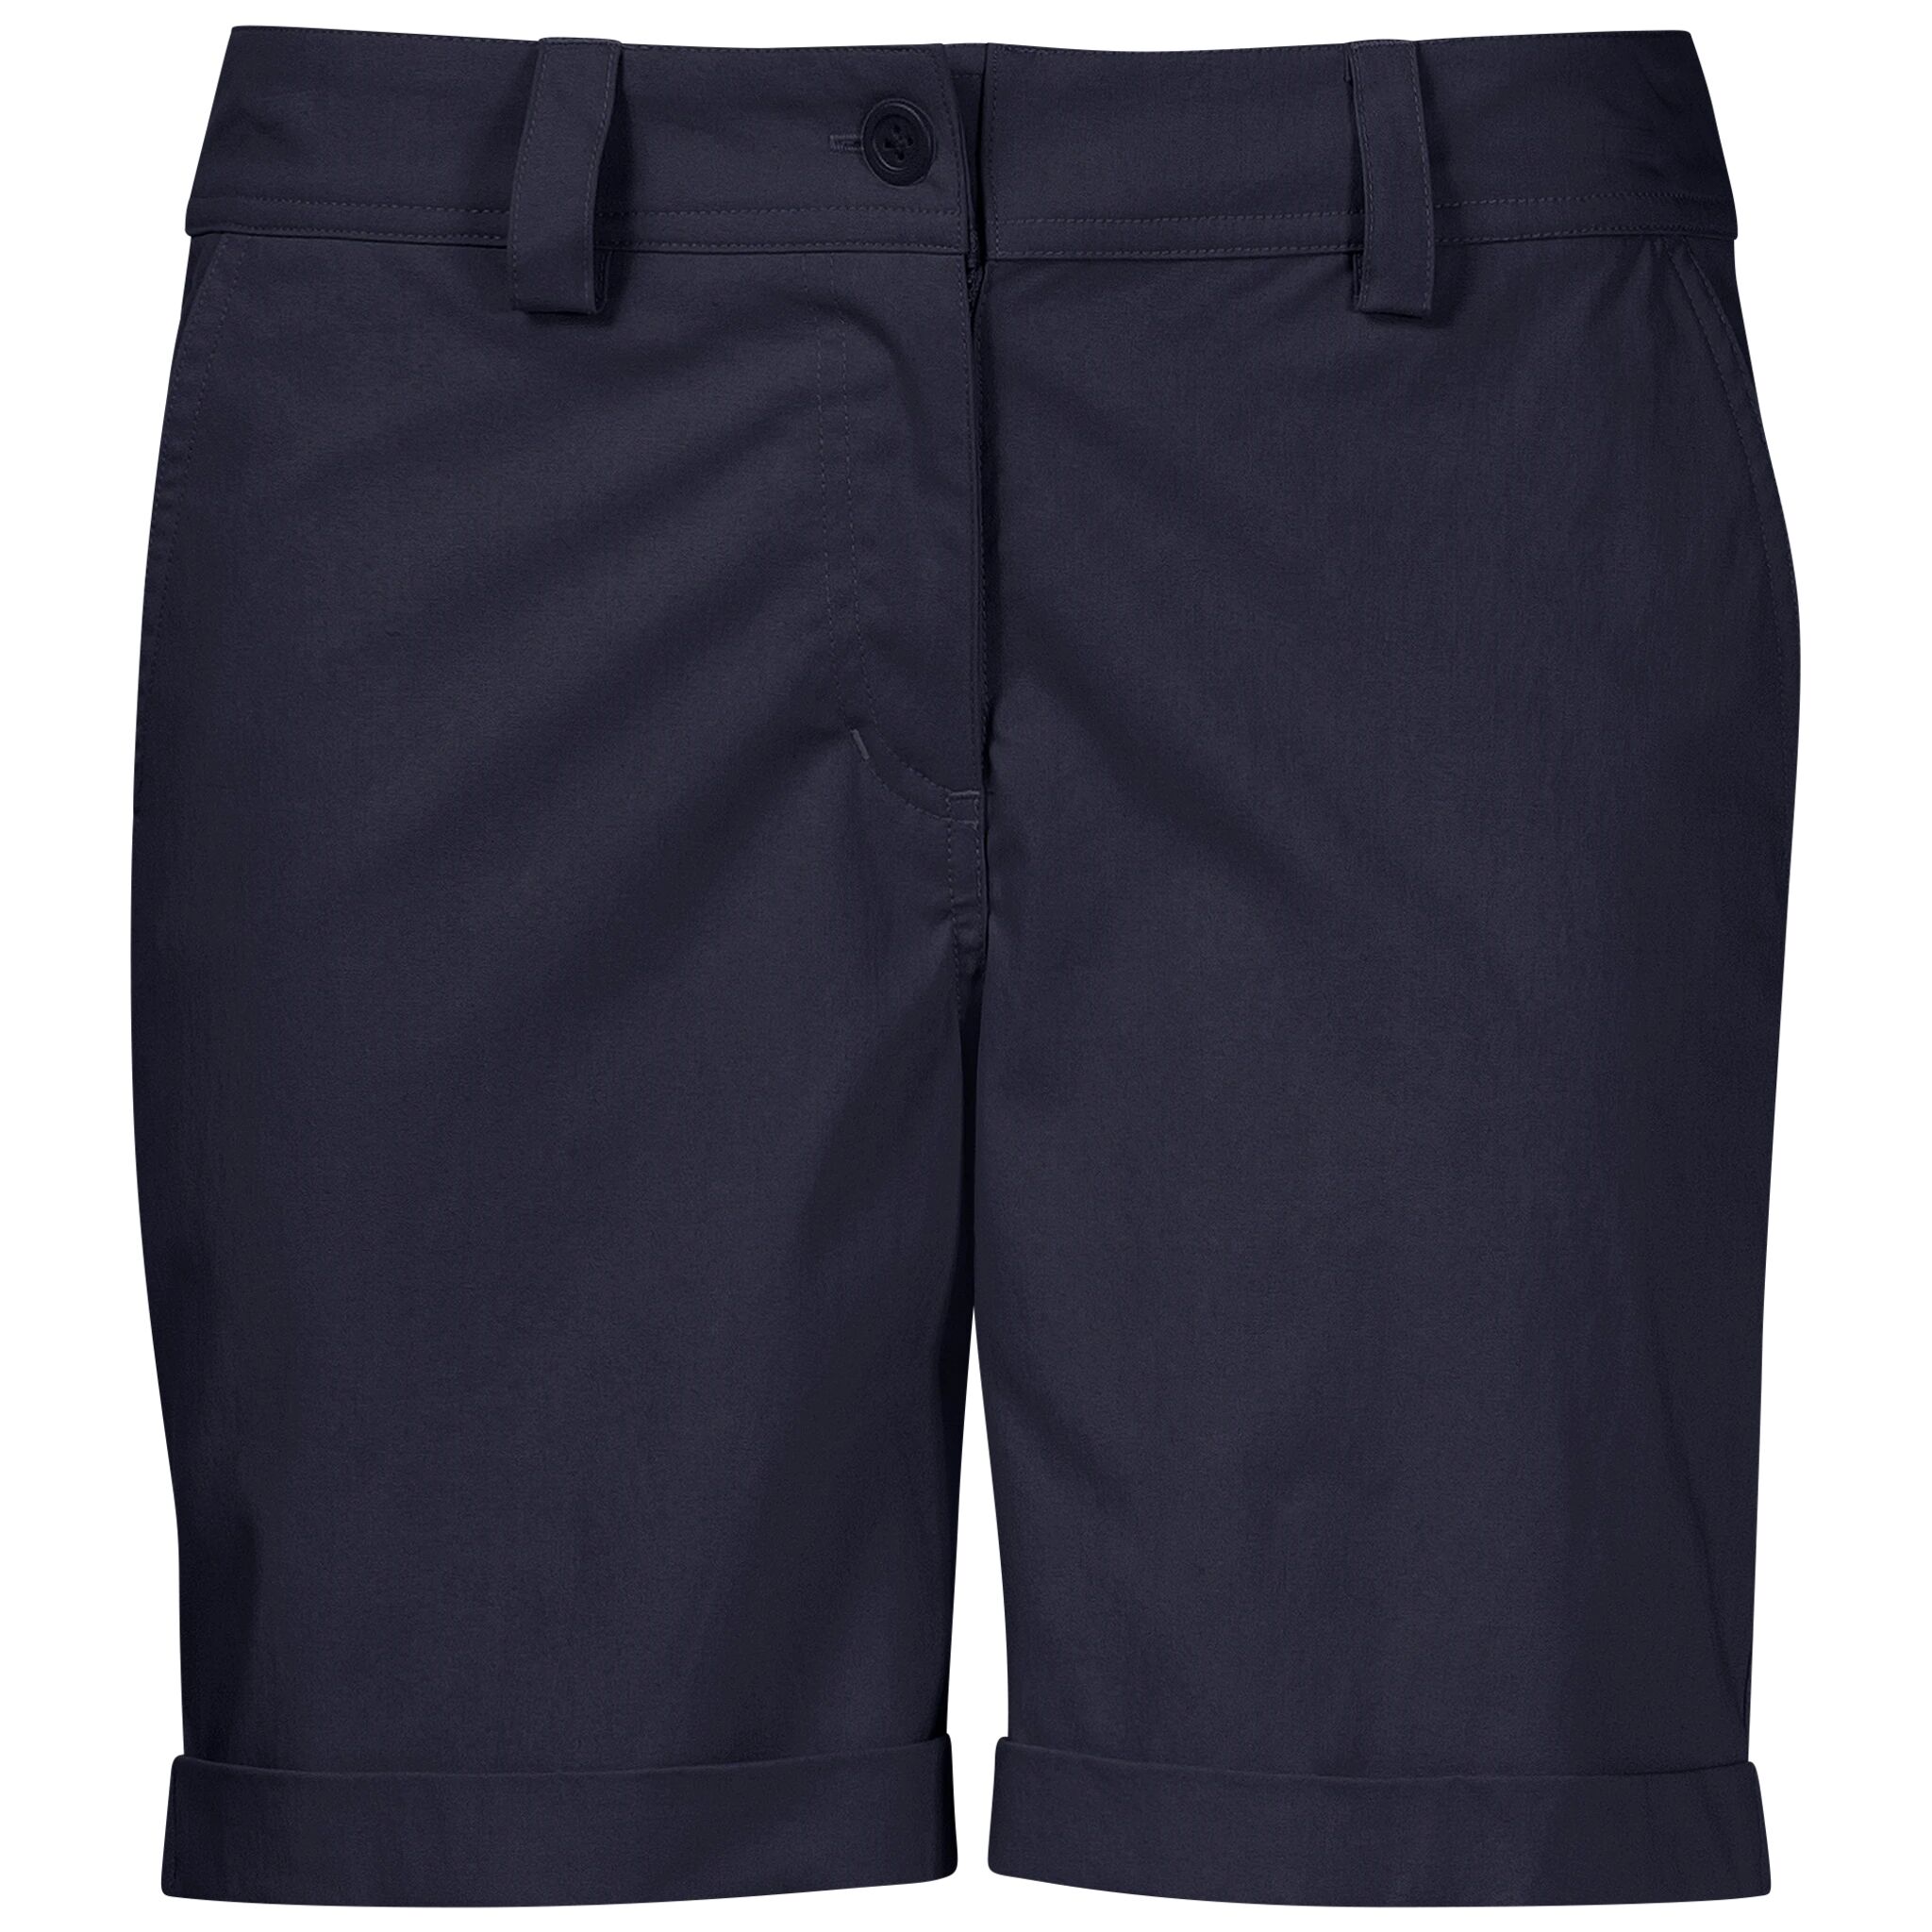 Bergans Oslo Shorts, dame L Dark Navy